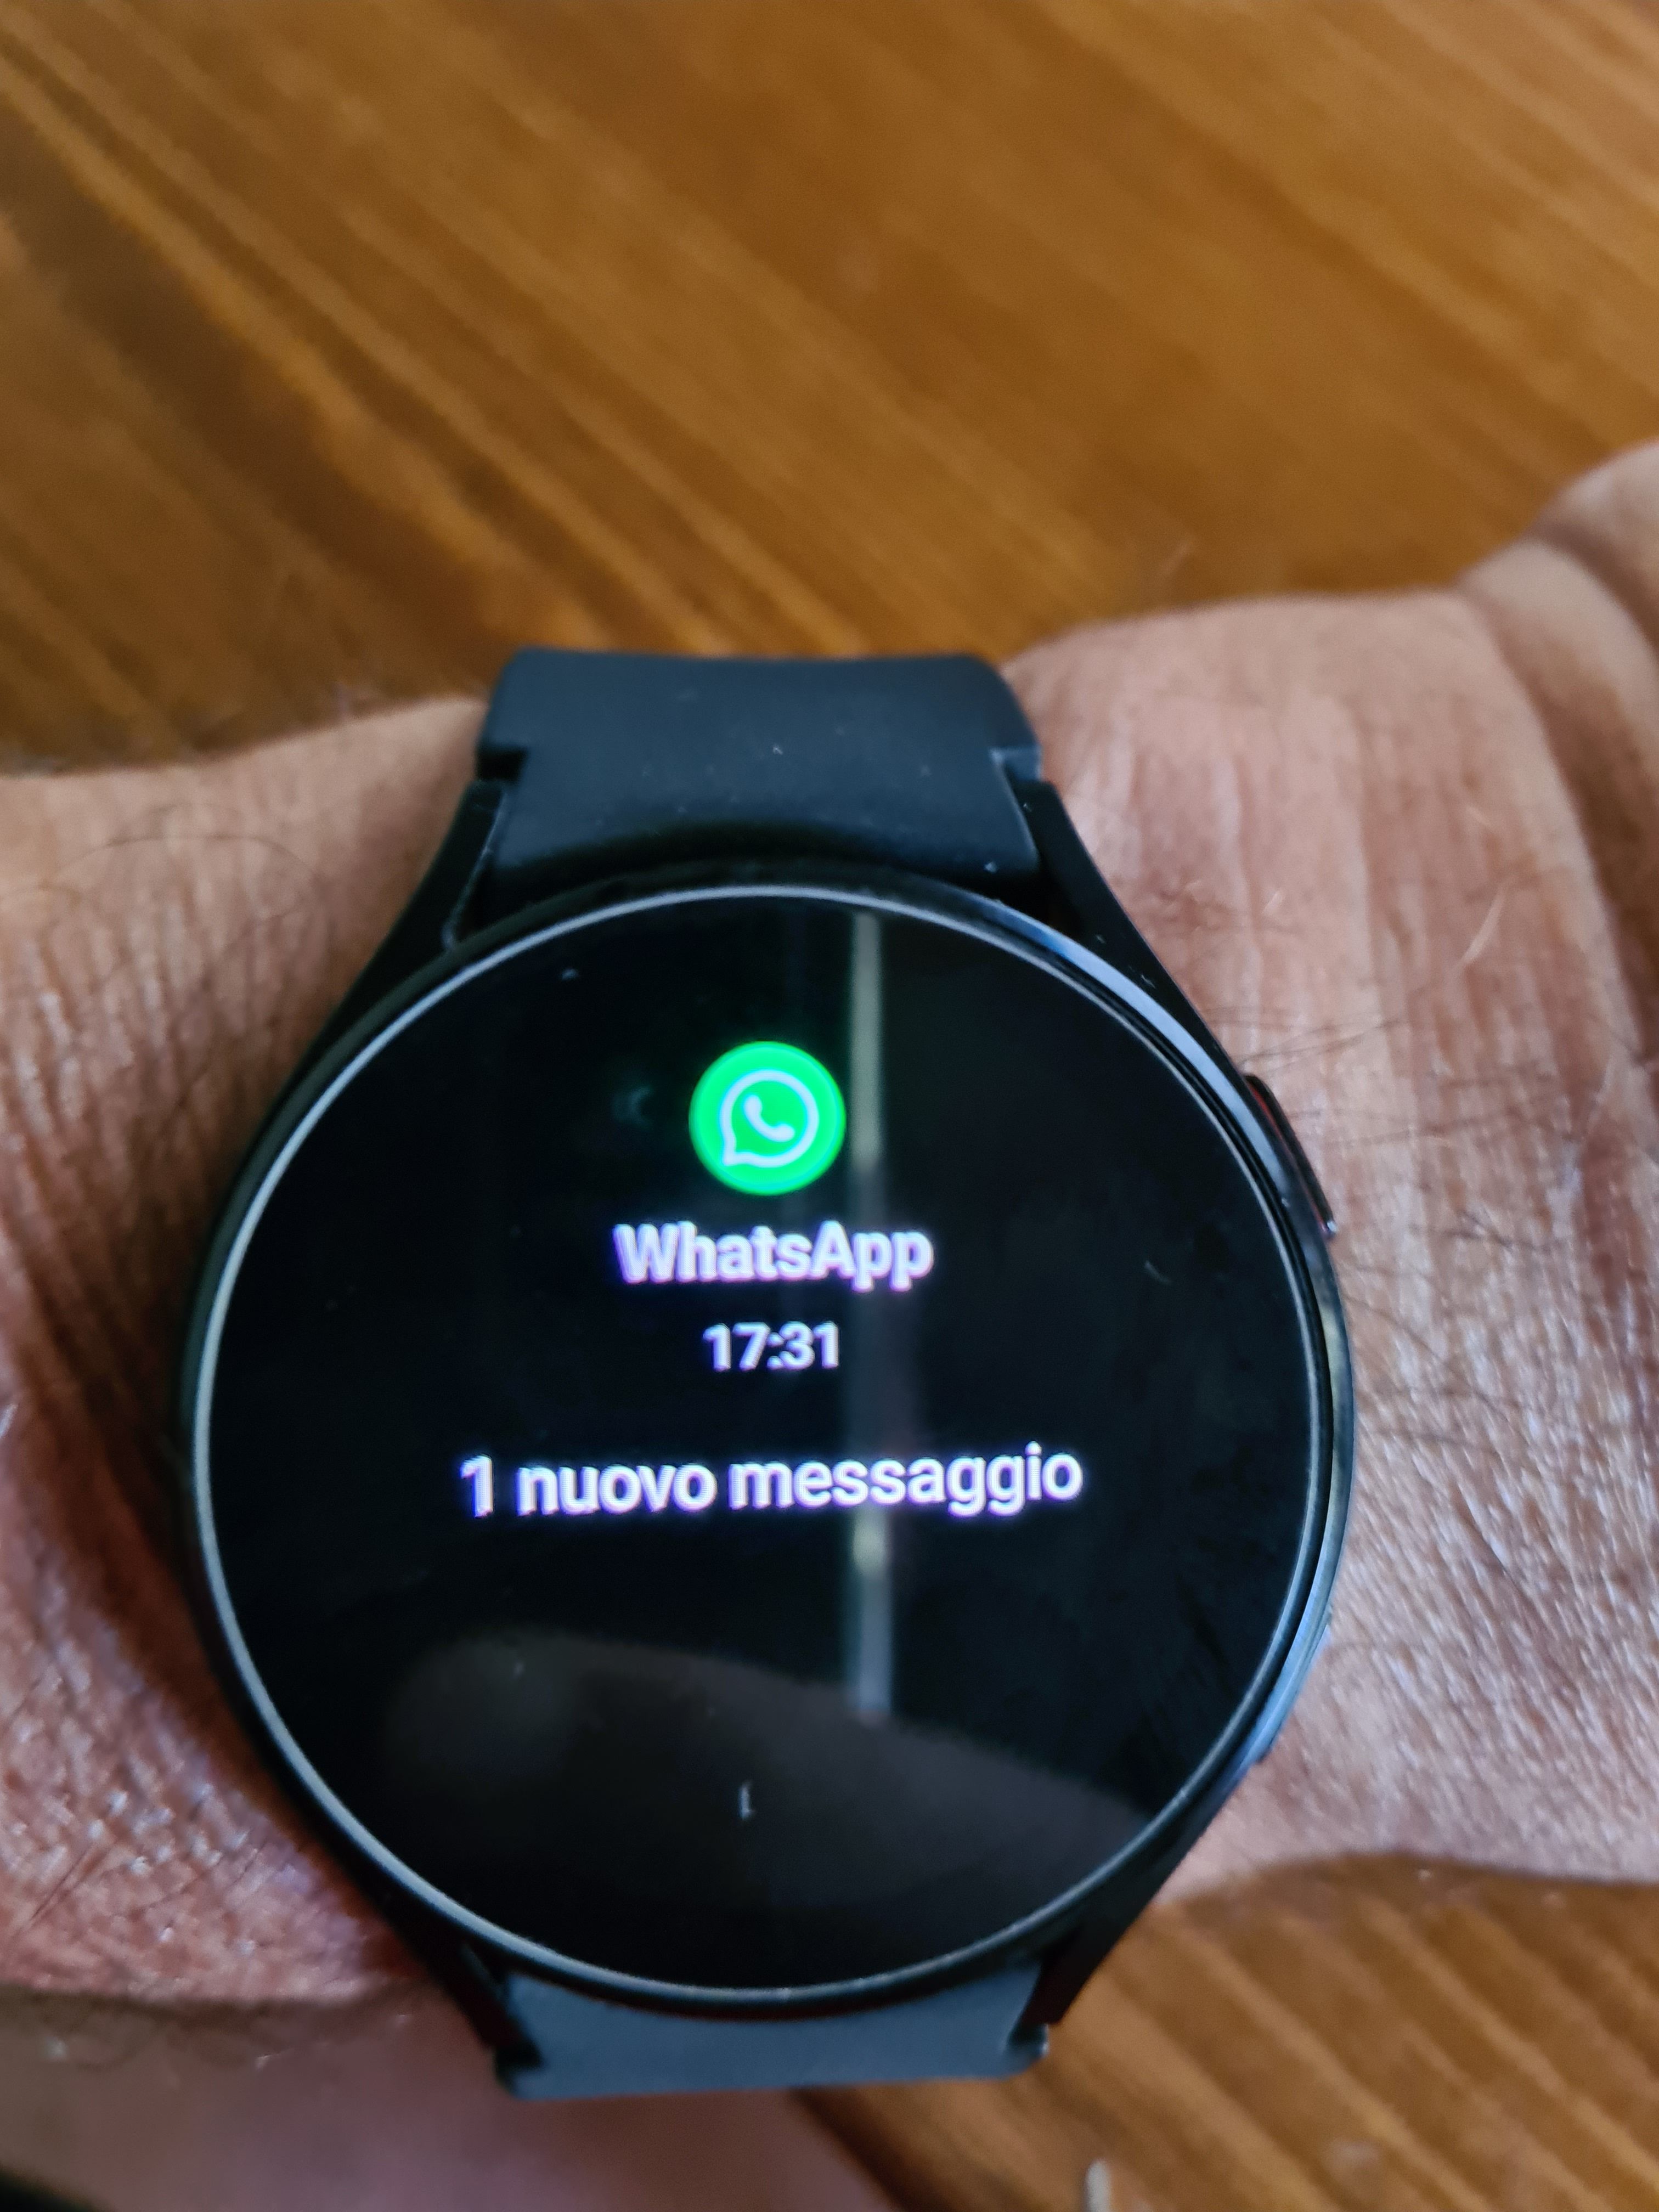 Galaxy watch 4 LTE Non vedo i messaggi whatsapp - Samsung Community